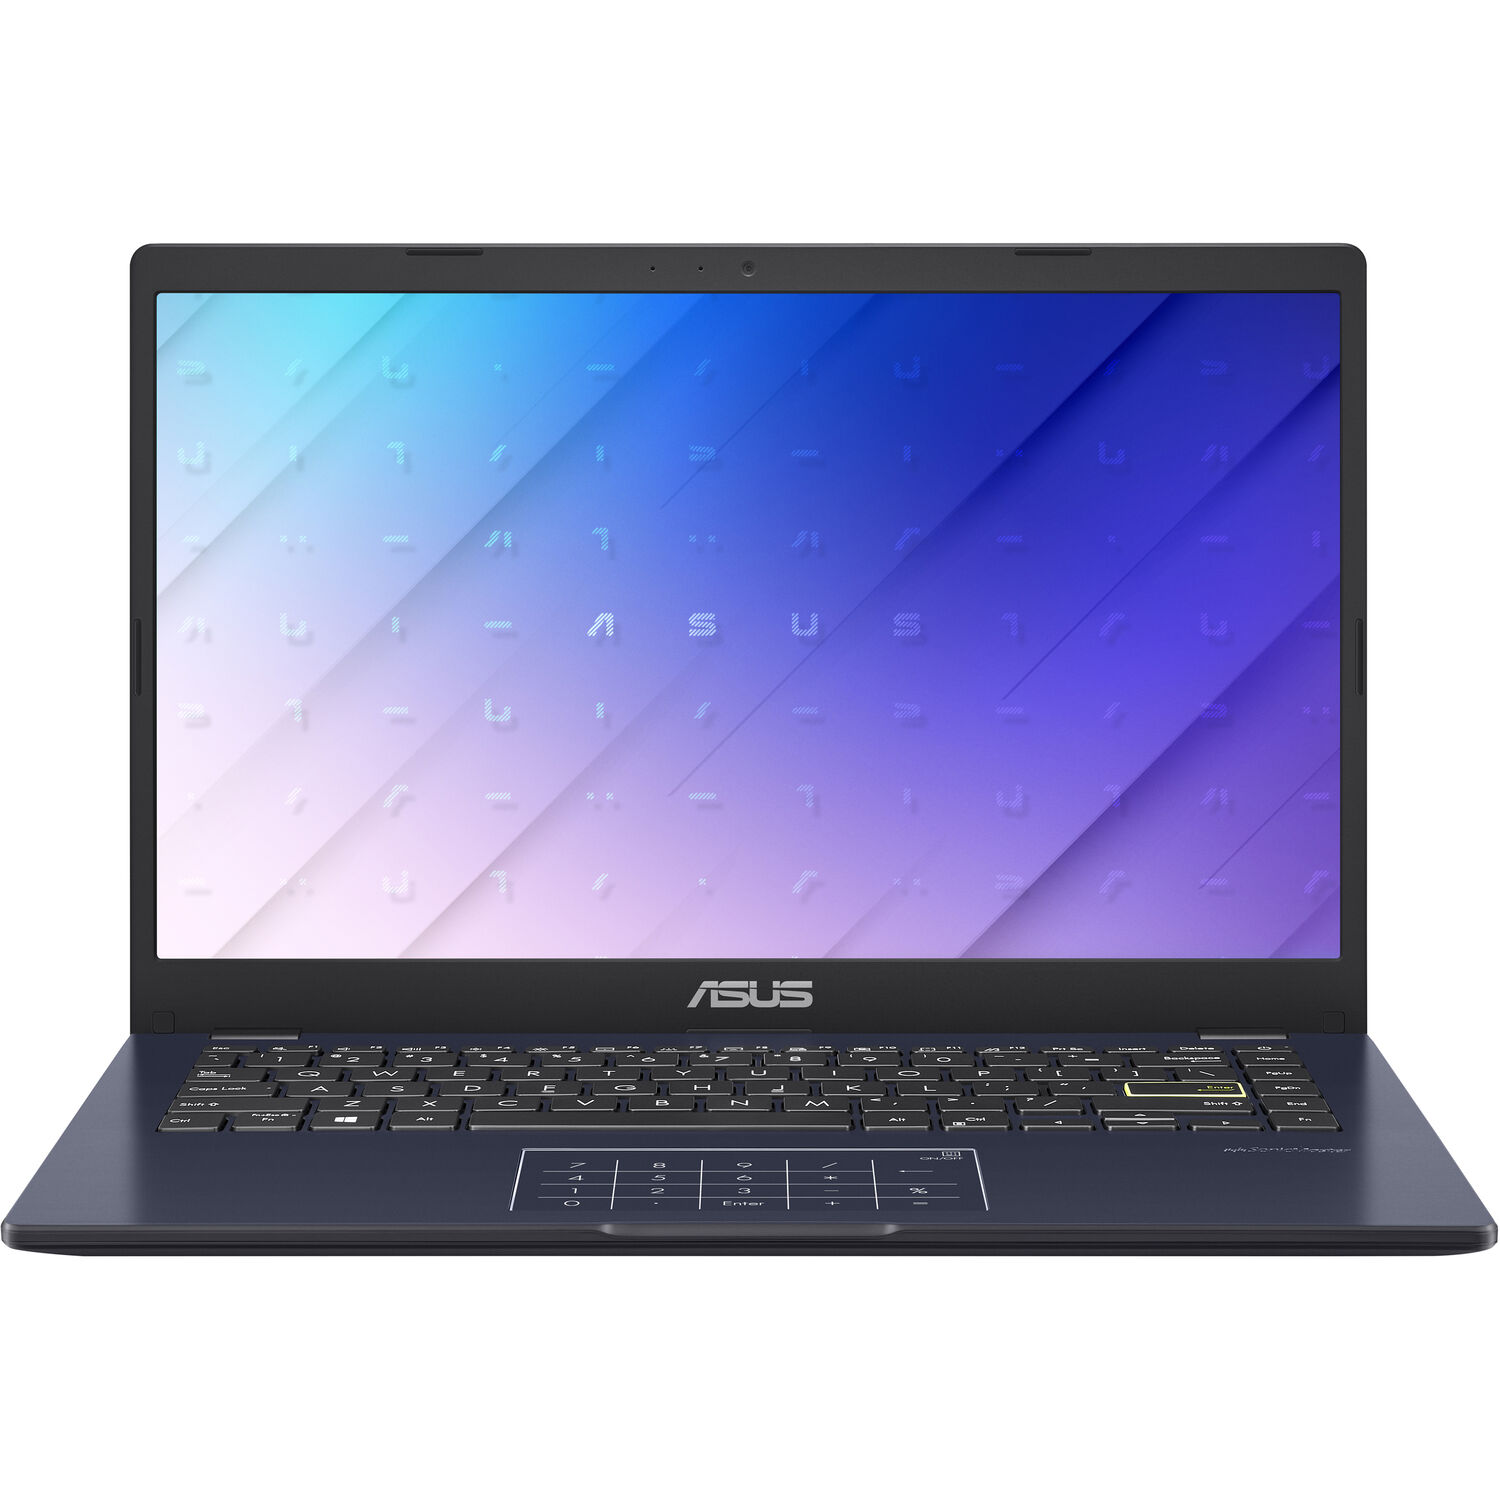 ASUS 14 L410 Everyday Value Laptop (Intel Celeron N4020 2-Core, 4GB RAM, 64GB SSD + 64GB eMMC, 14.0" Full HD (1920x1080), Intel UHD 600, Wifi, Bluetooth, Webcam, 1xUSB 3.2, 1xHDMI, Win 10 Home) - image 1 of 6